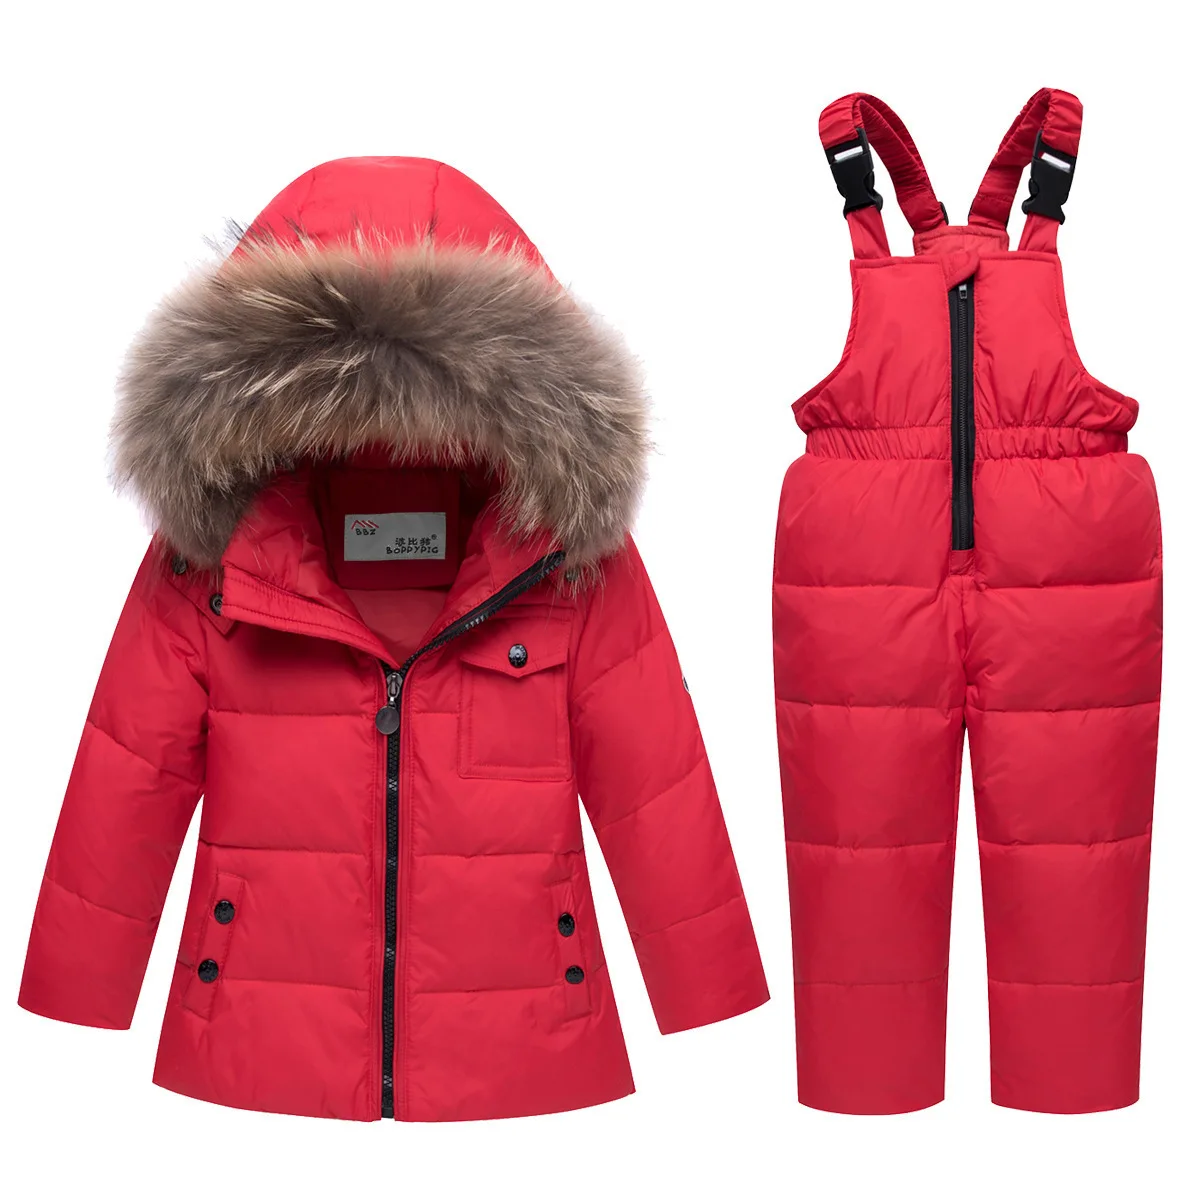 children ski toddler snowsuit waterproof clothing Set boy baby infant girl winter thin down jacket warm kids coat clothes